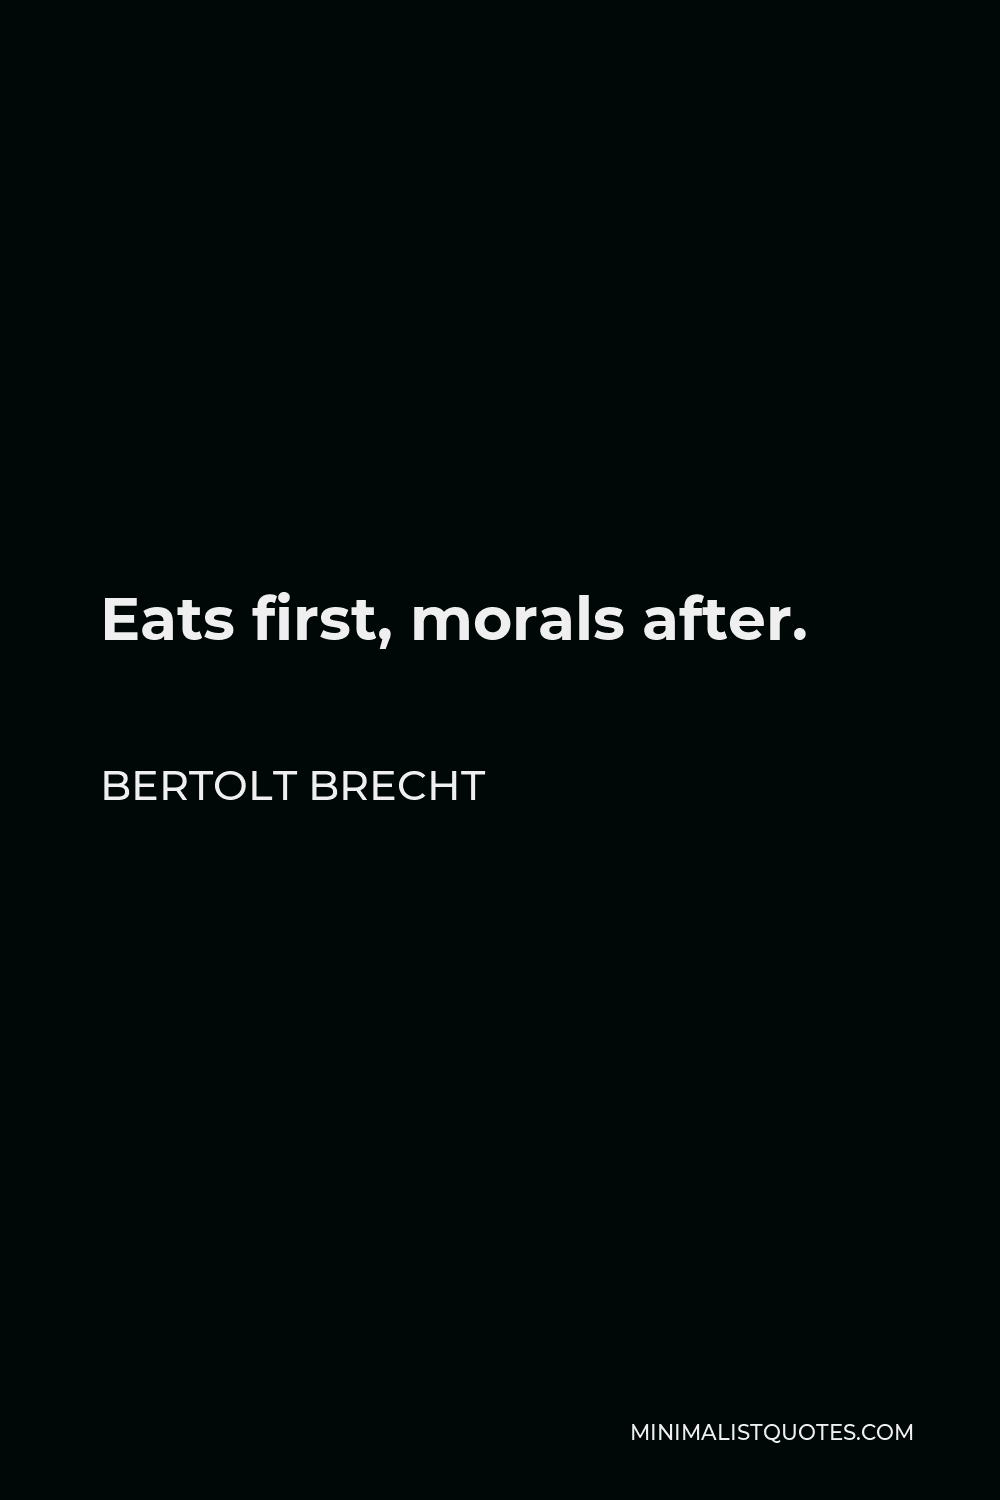 Bertolt Brecht Quote - Eats first, morals after.